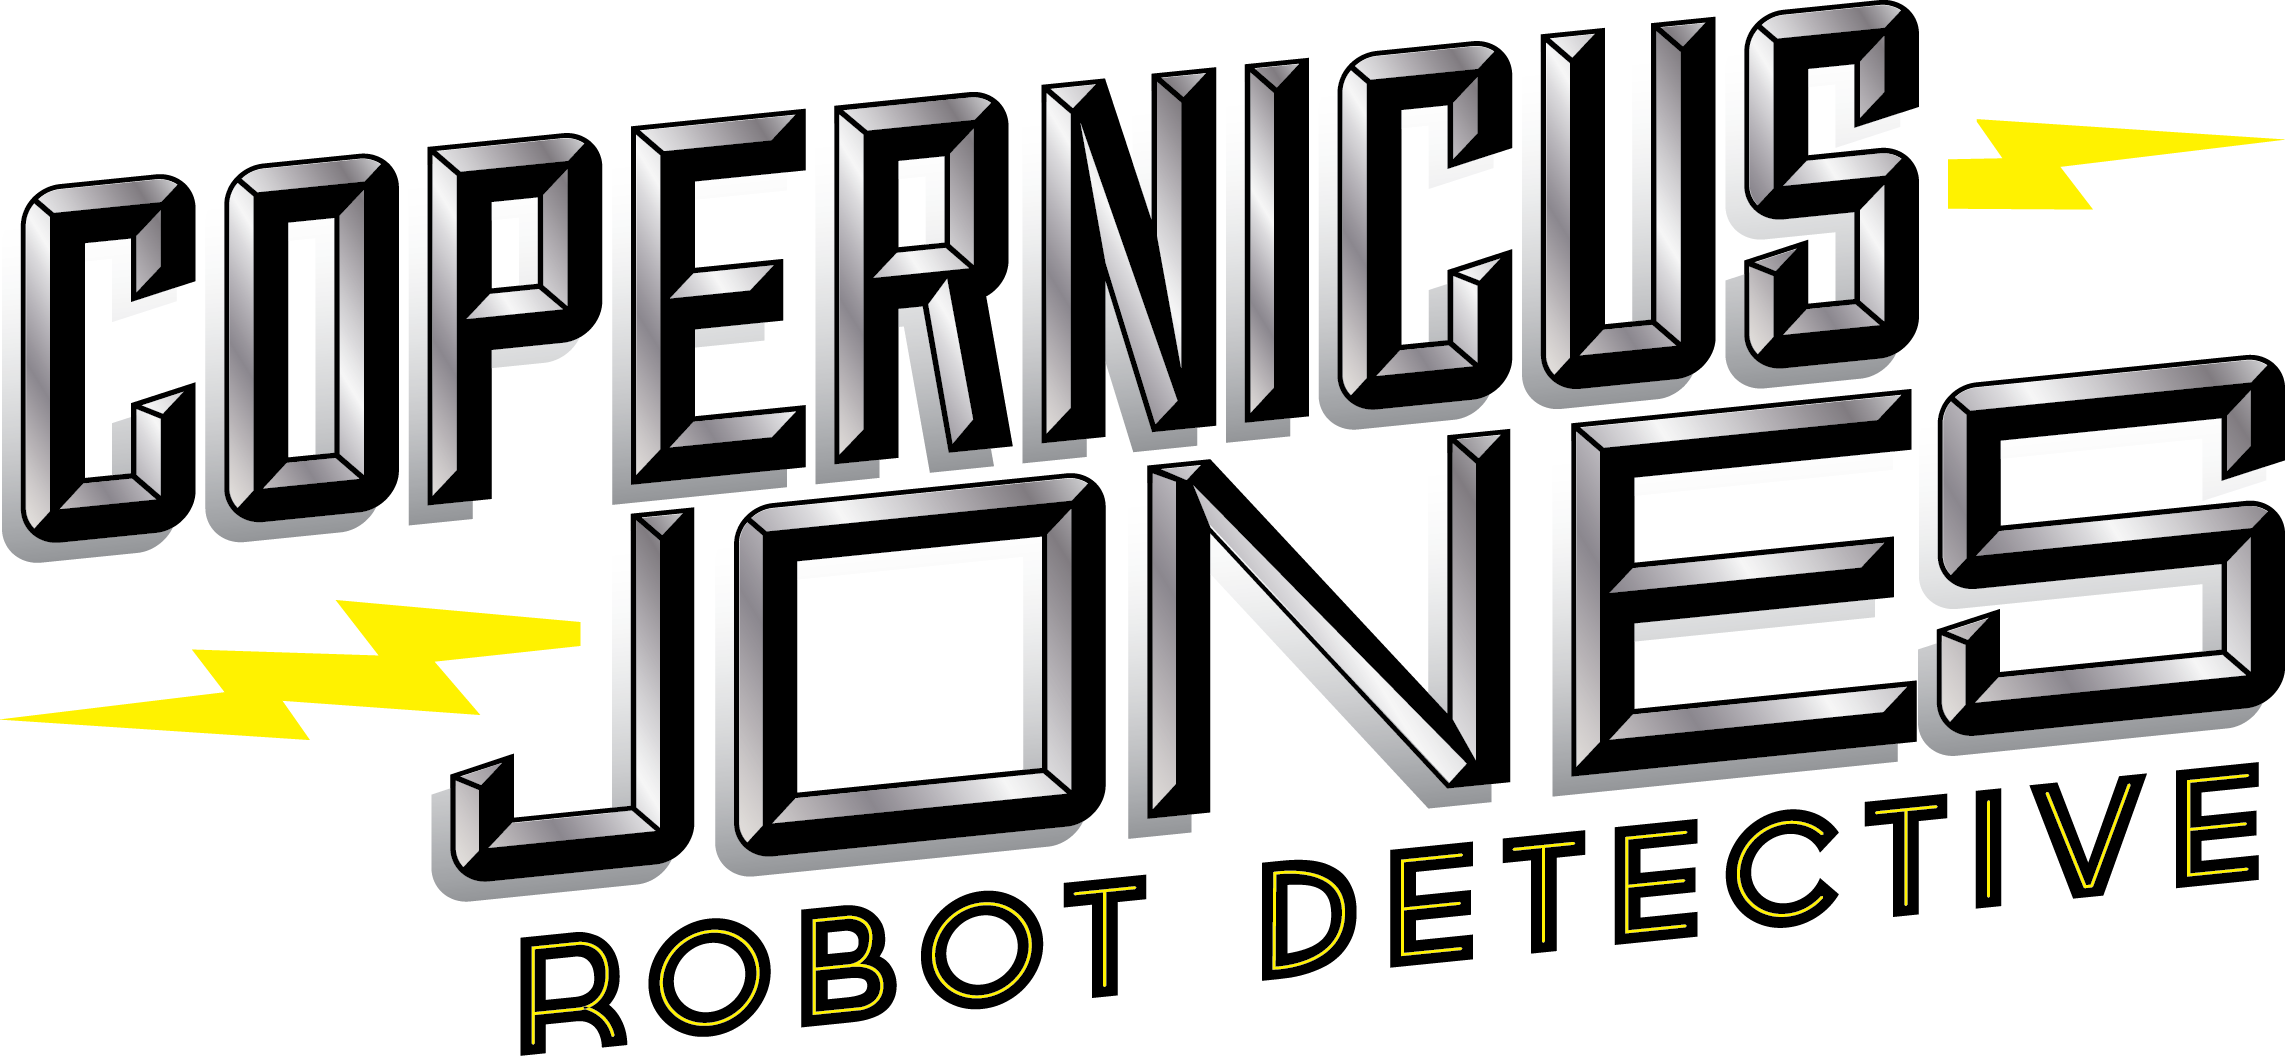 Webcomic of the Month! February: Copernicus Jones: Robot Detective